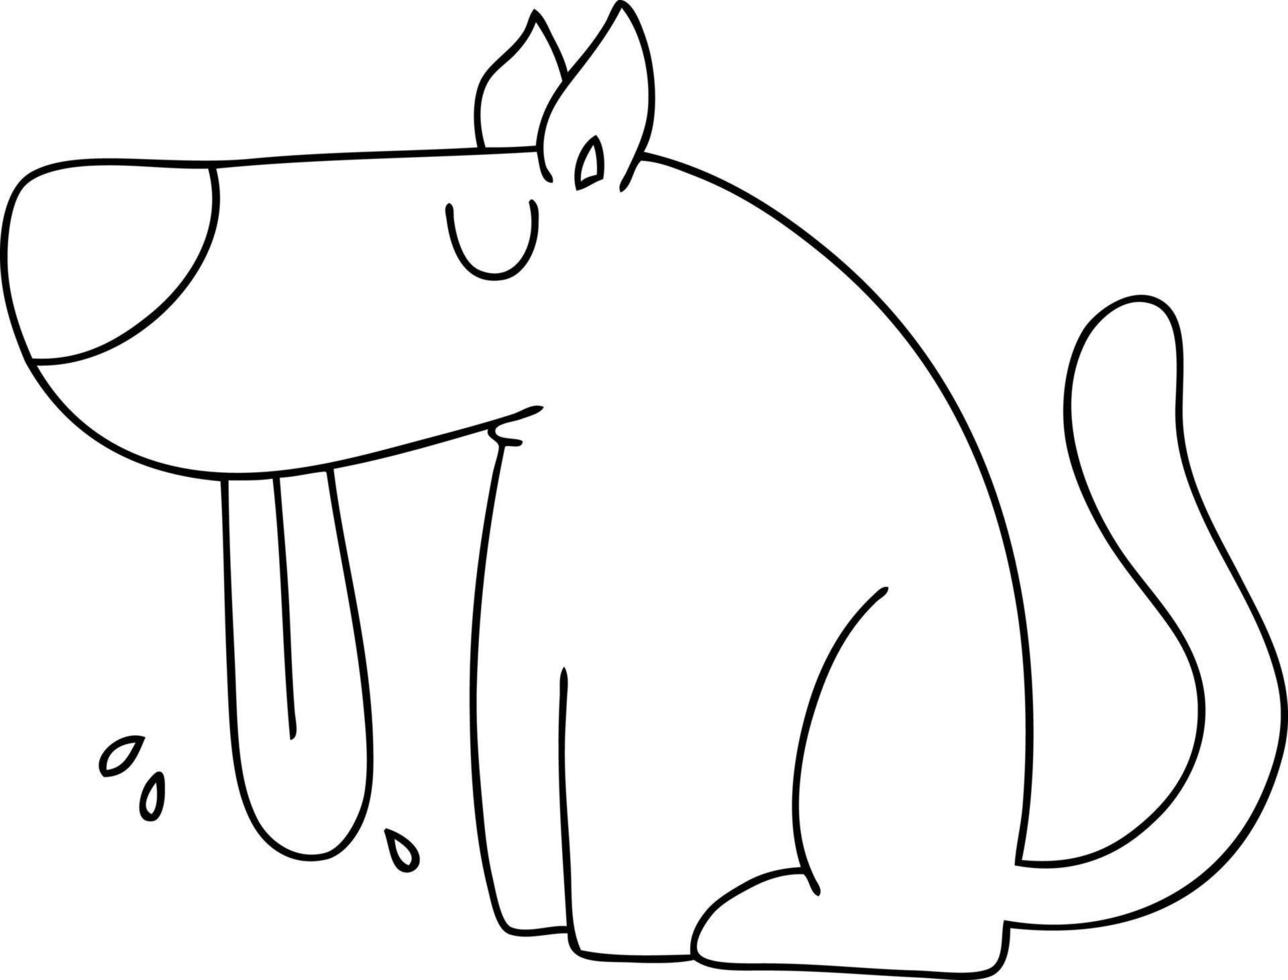 eigenzinnige lijntekening cartoon hond vector